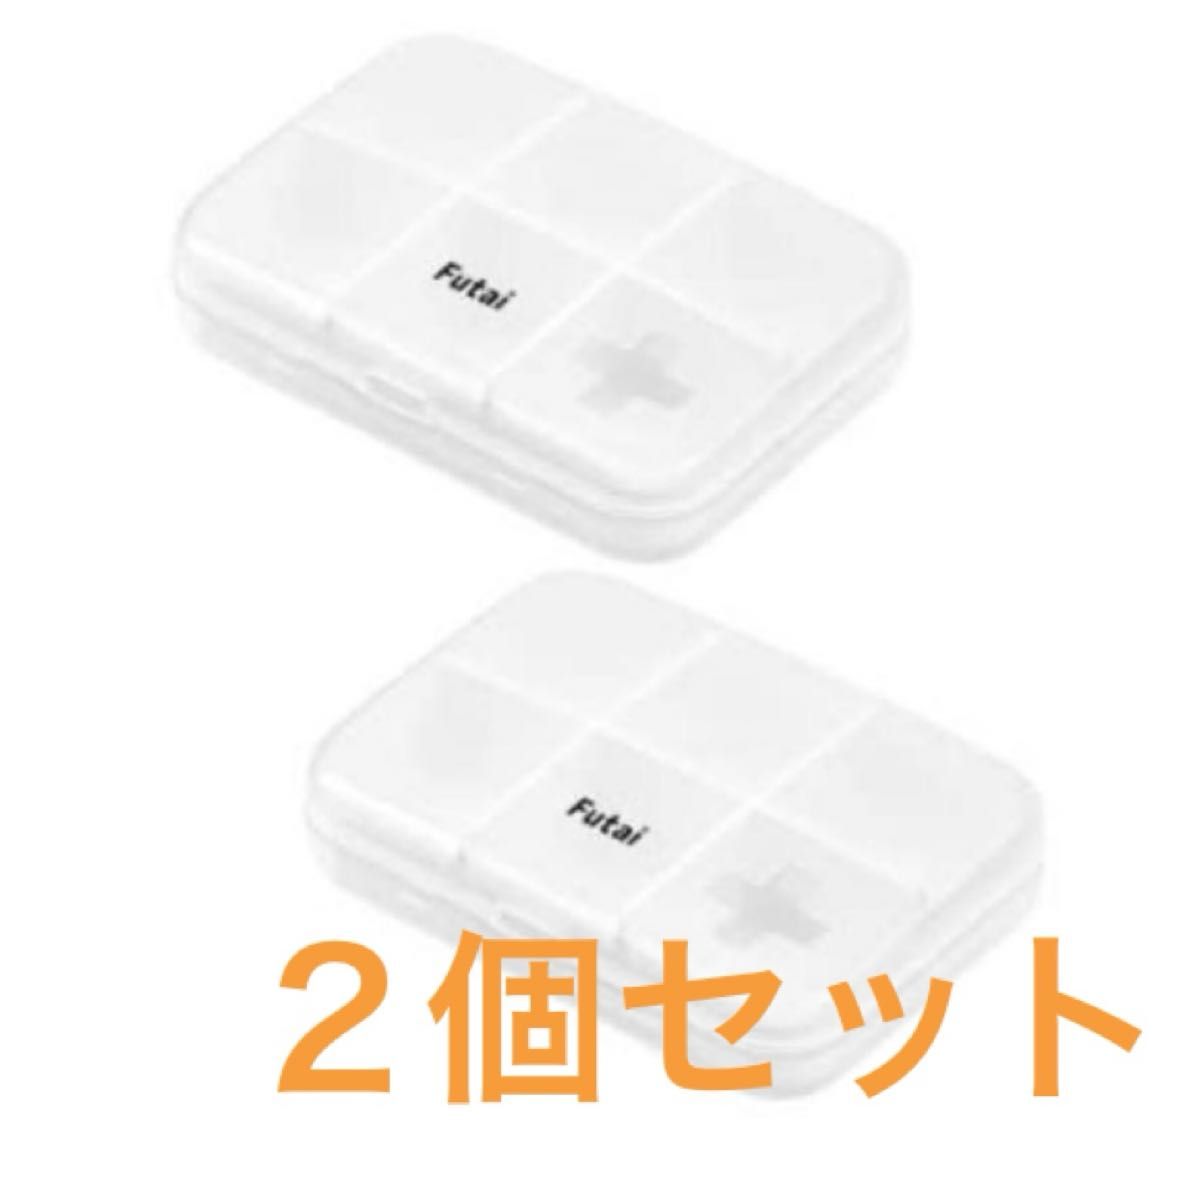 Futai(フタイ) ピルケース 携帯用 サプリメントケース 薬ケース ホワイト